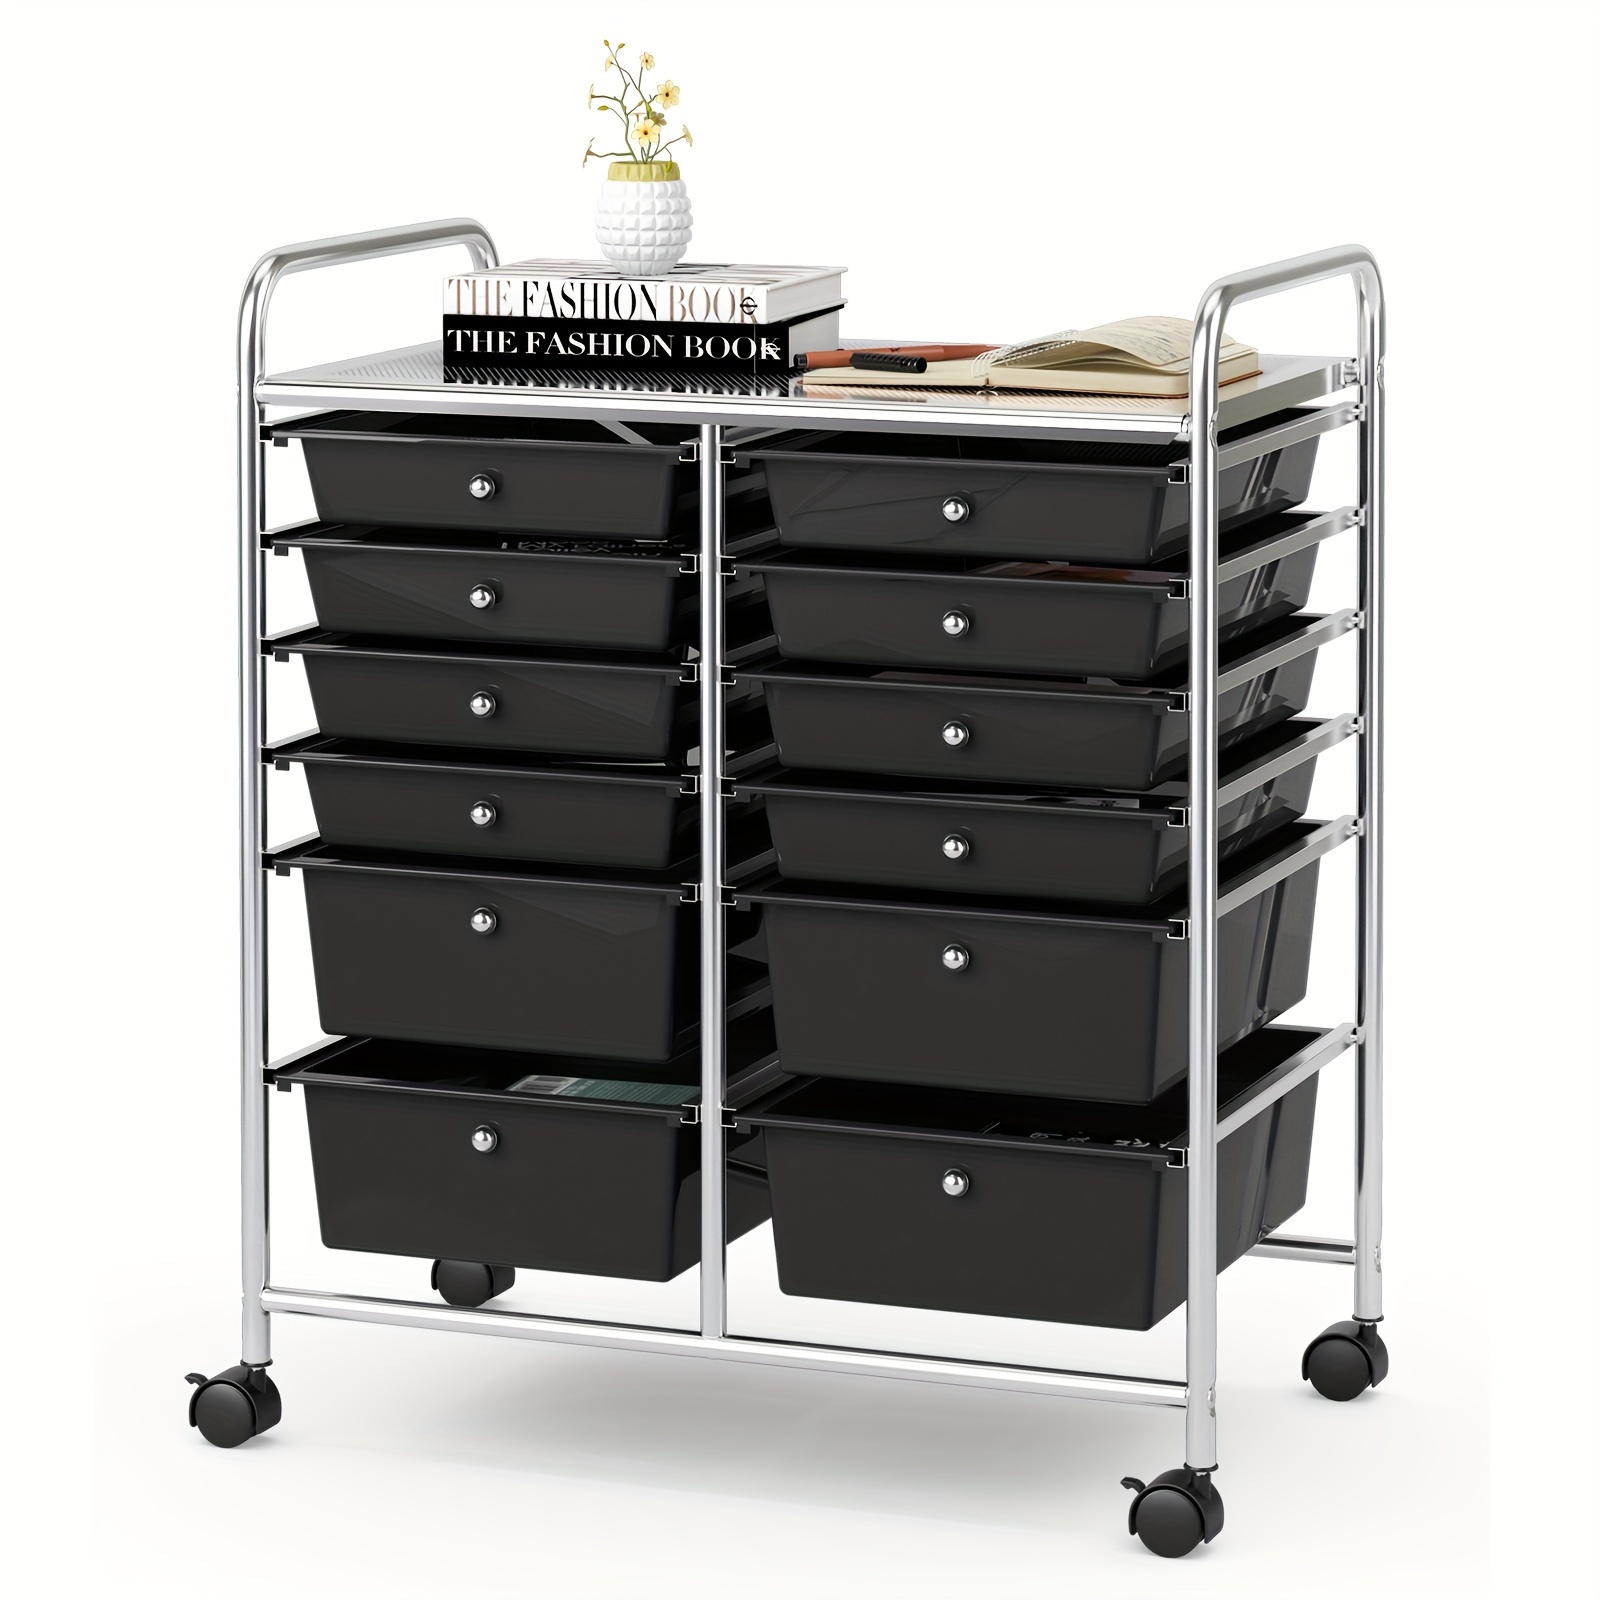 

12 Drawers Rolling Cart Storage Scrapbook Paper Studio Organizer Bins Black